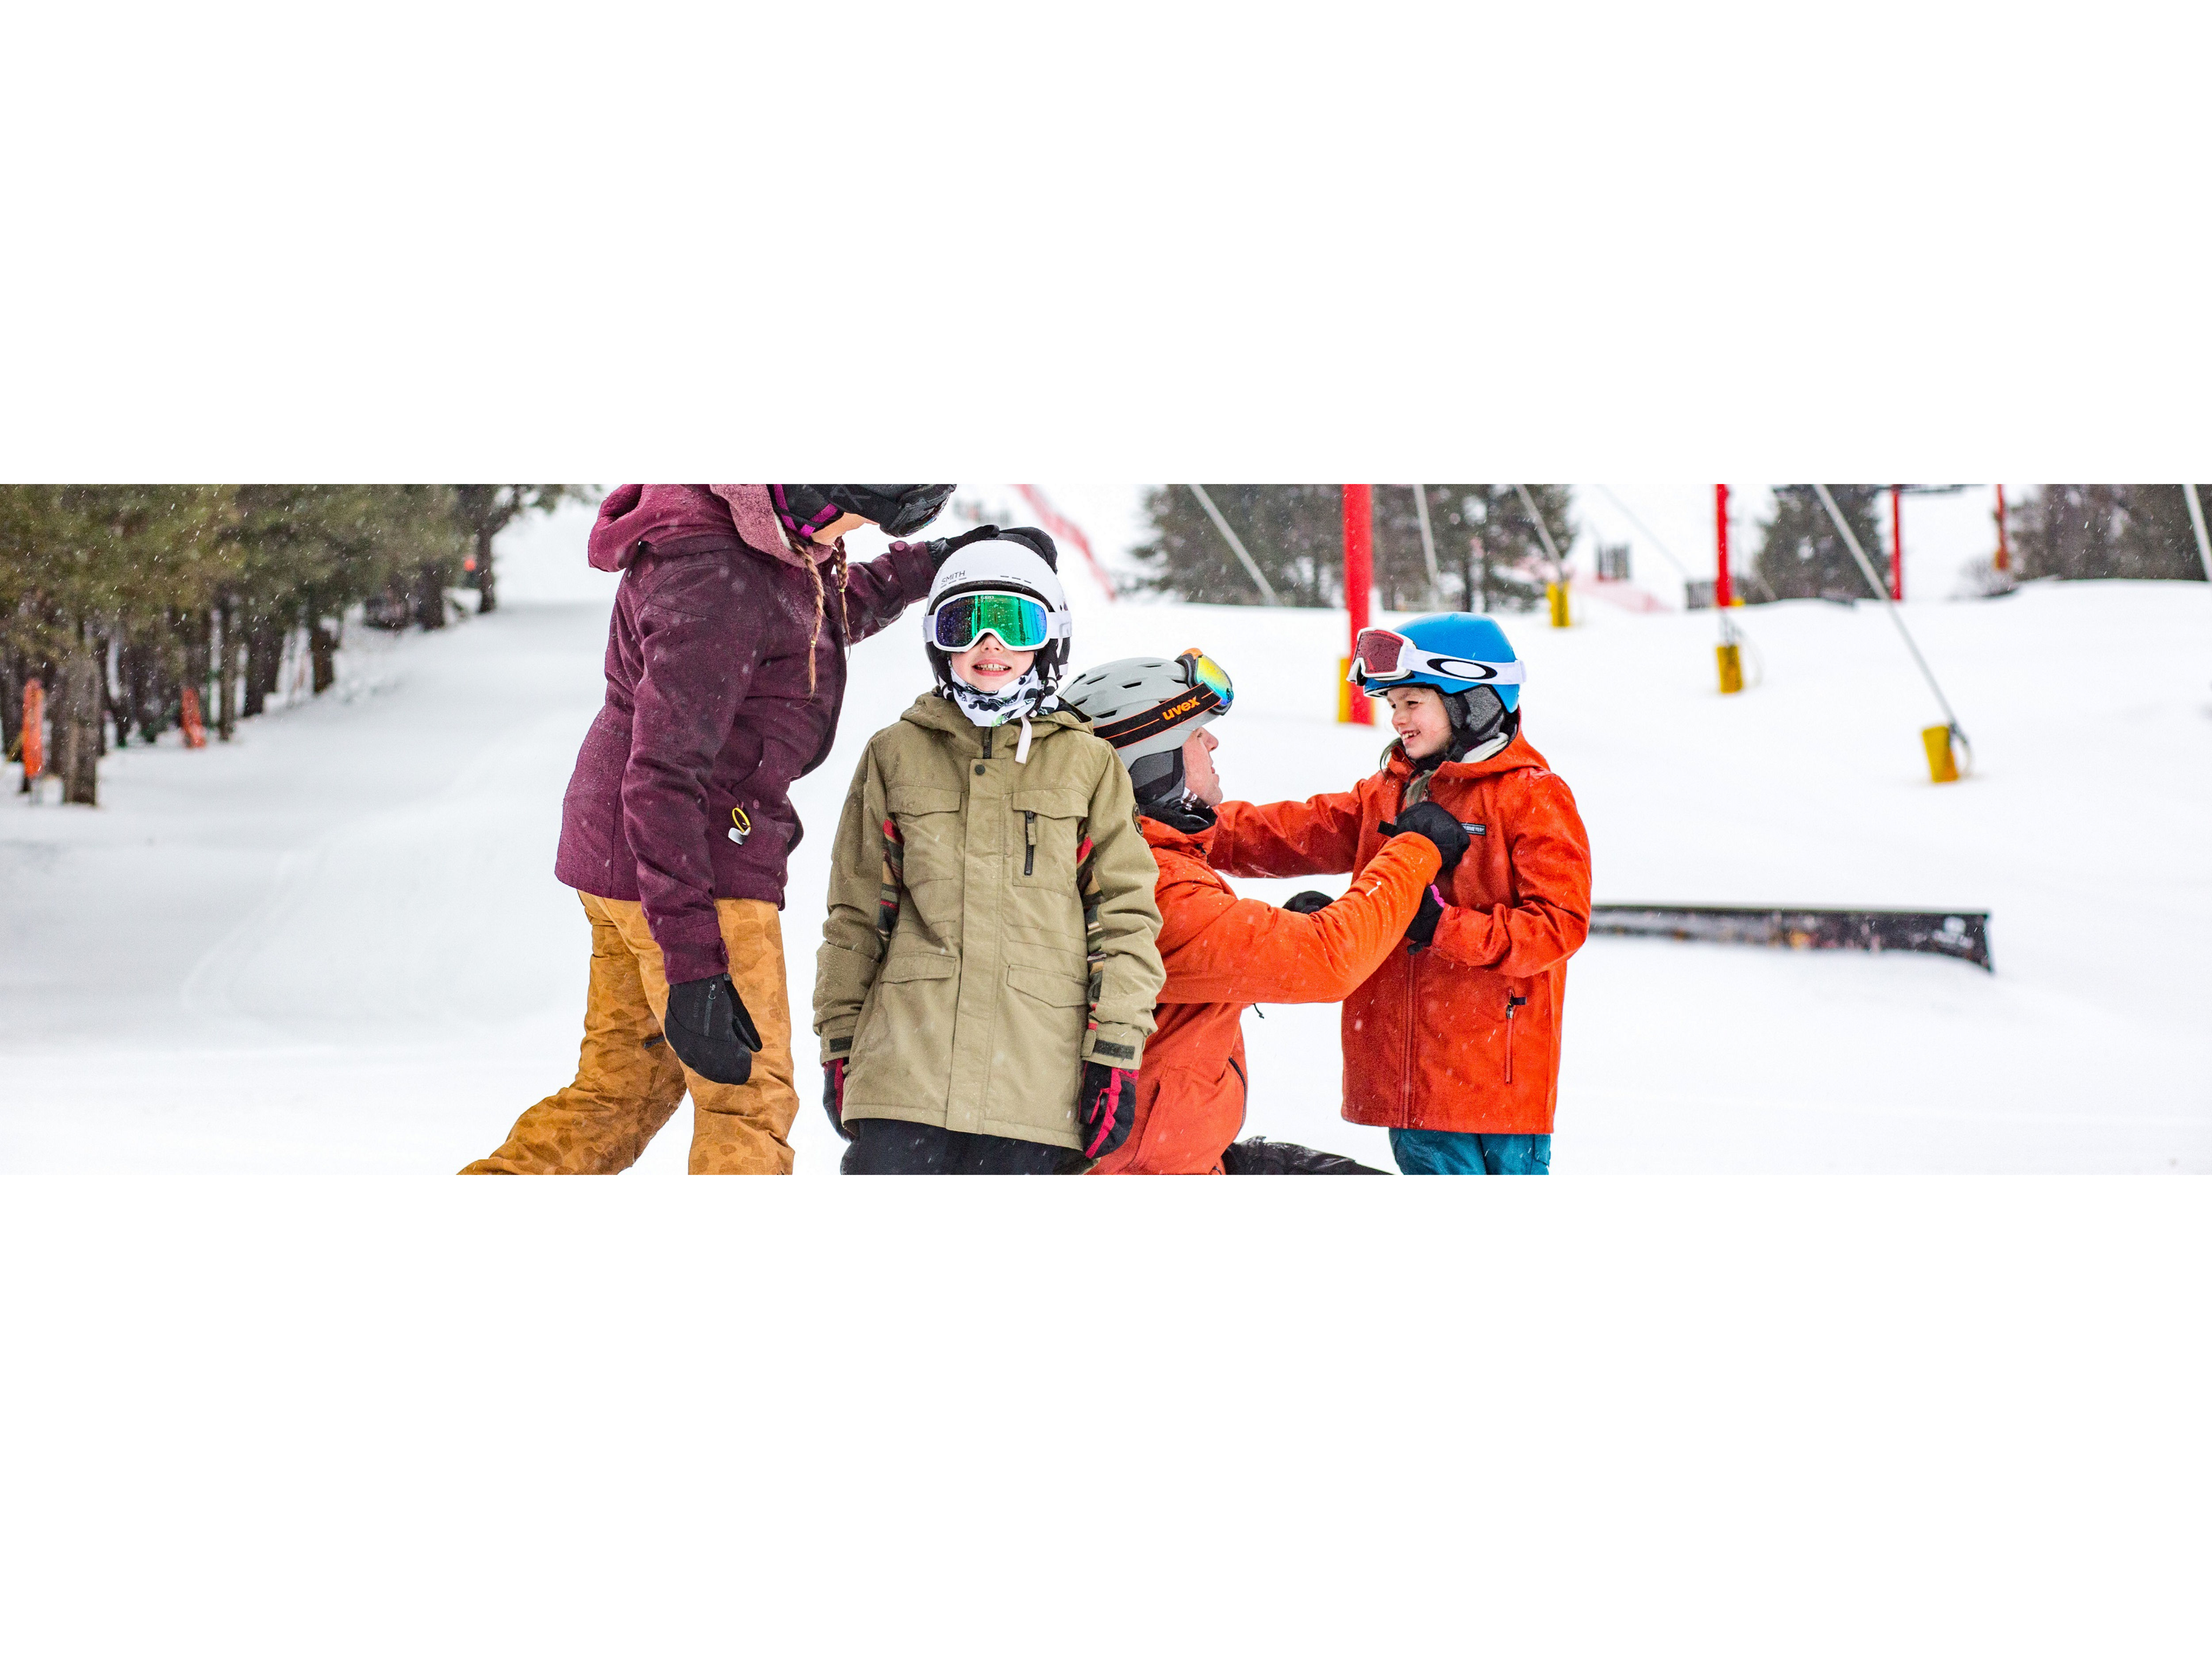 Ski and Snowboard Rentals